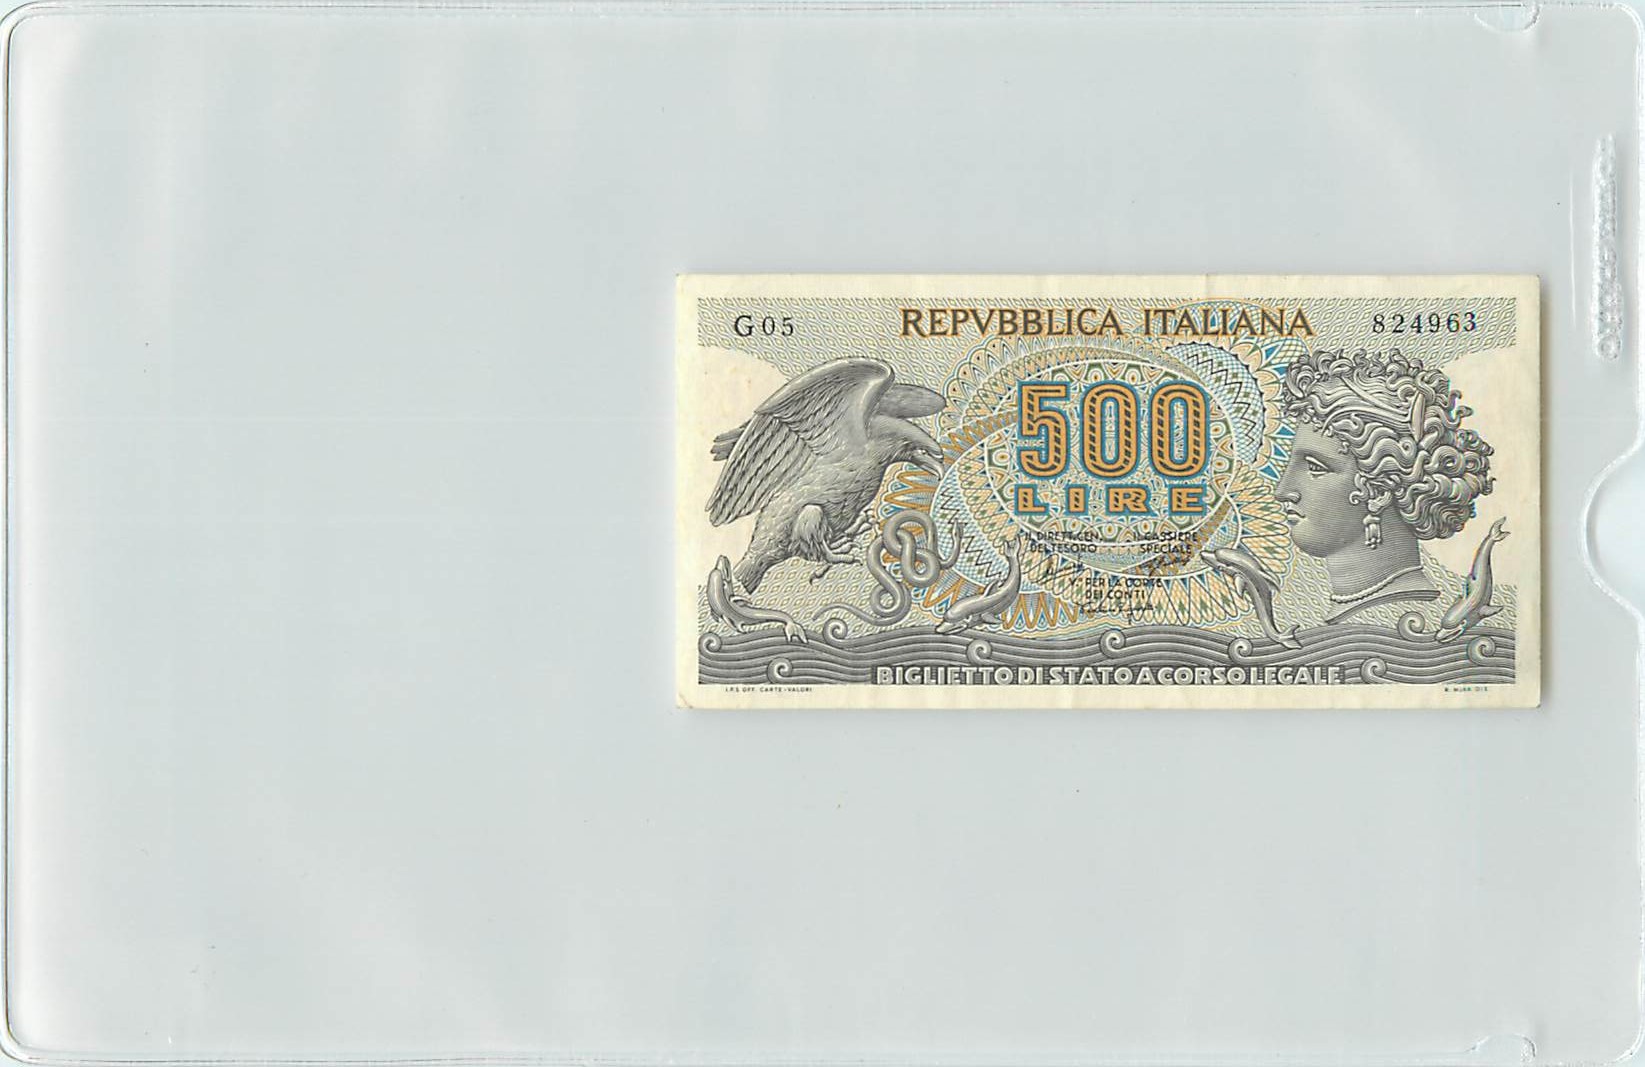 Italy 500 lire front 2015_08_18_05_41_550001.jpg